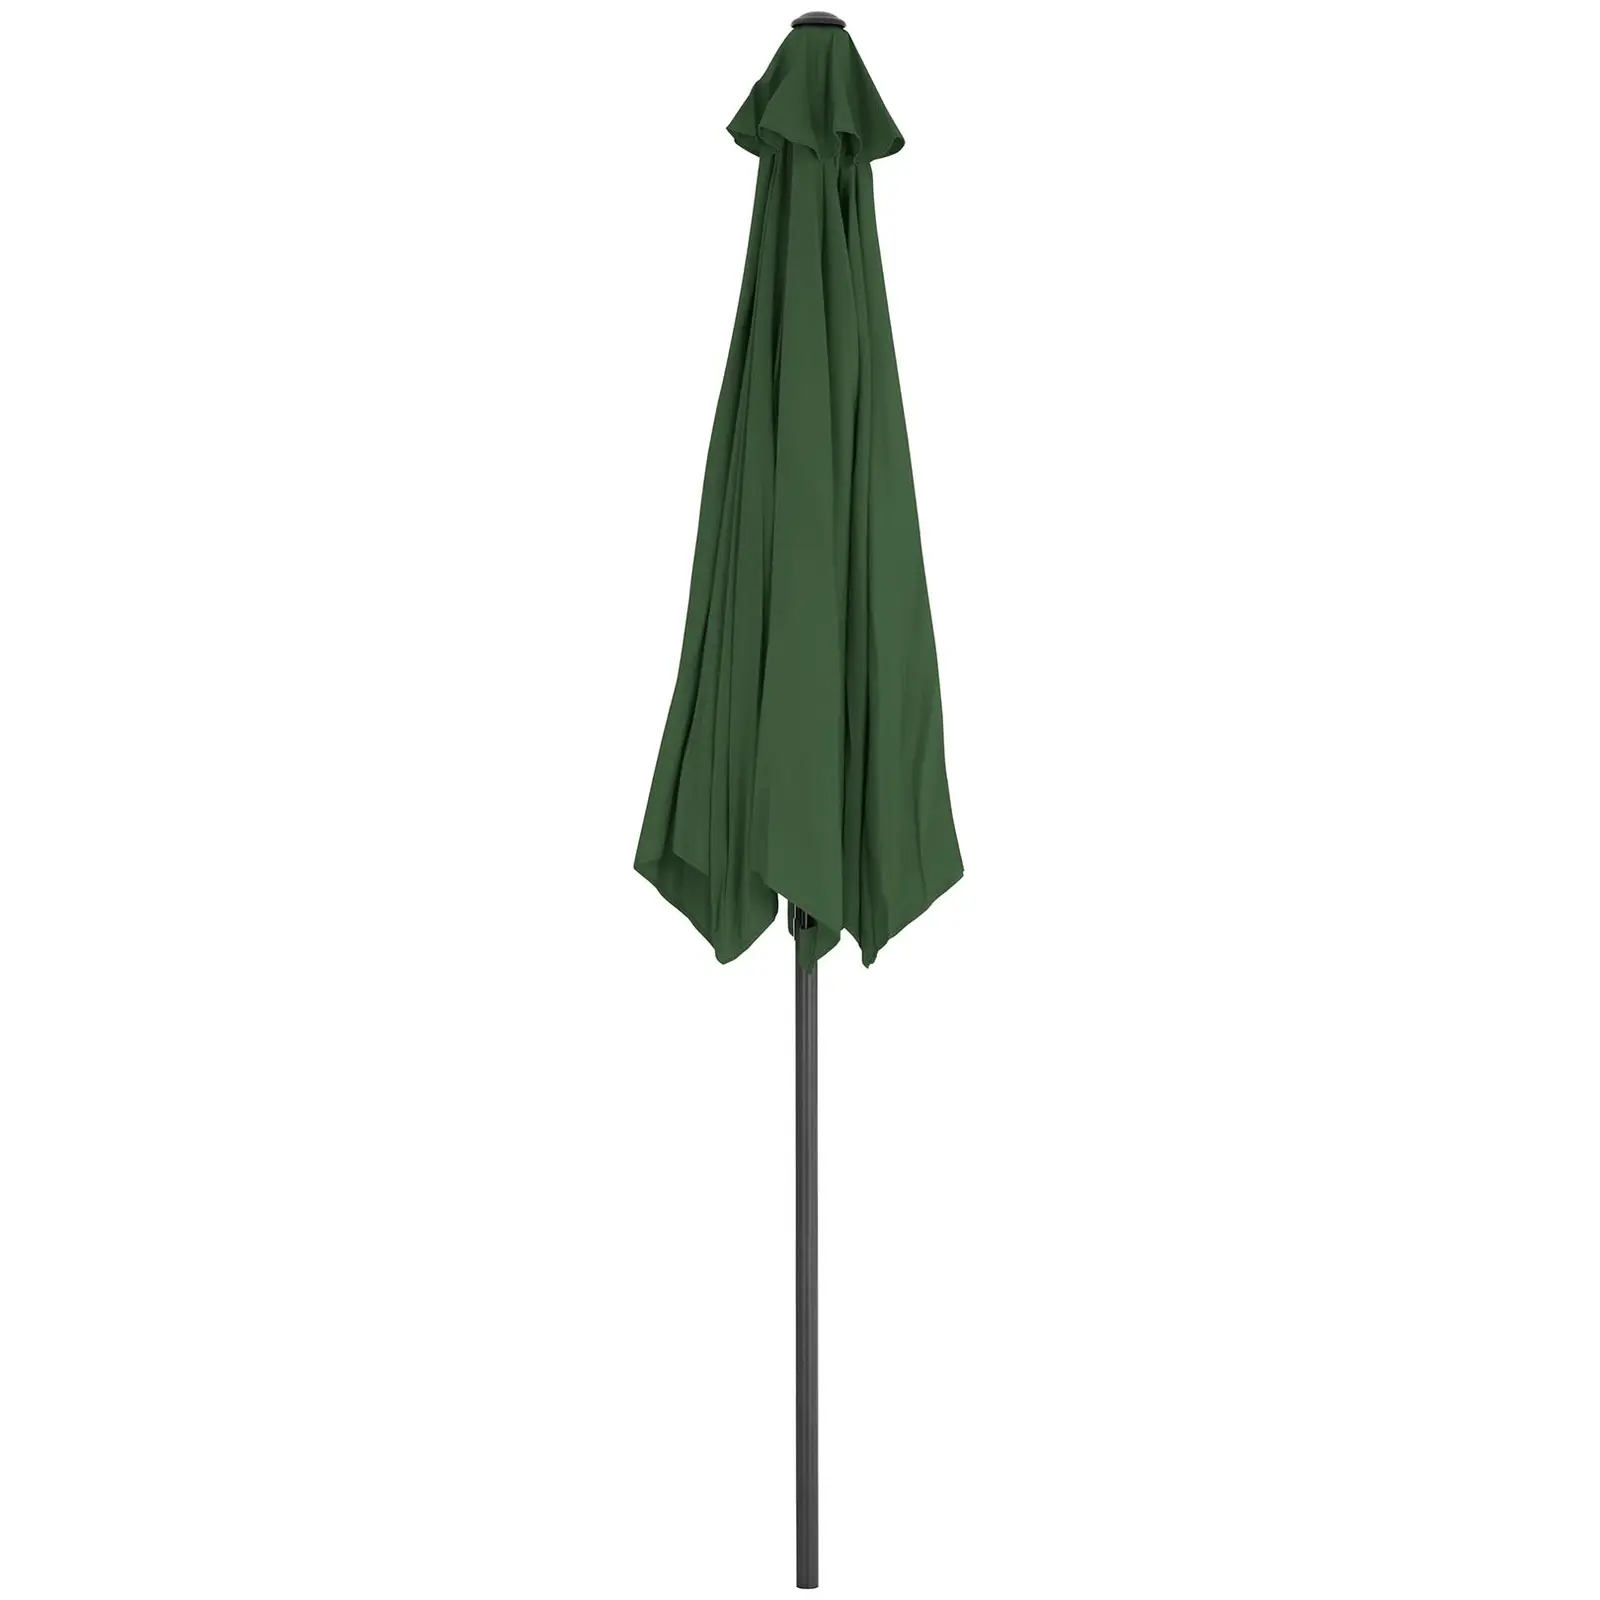 Occasion Parasol de terrasse – Vert – Hexagonale – Ø 270 cm – Inclinable